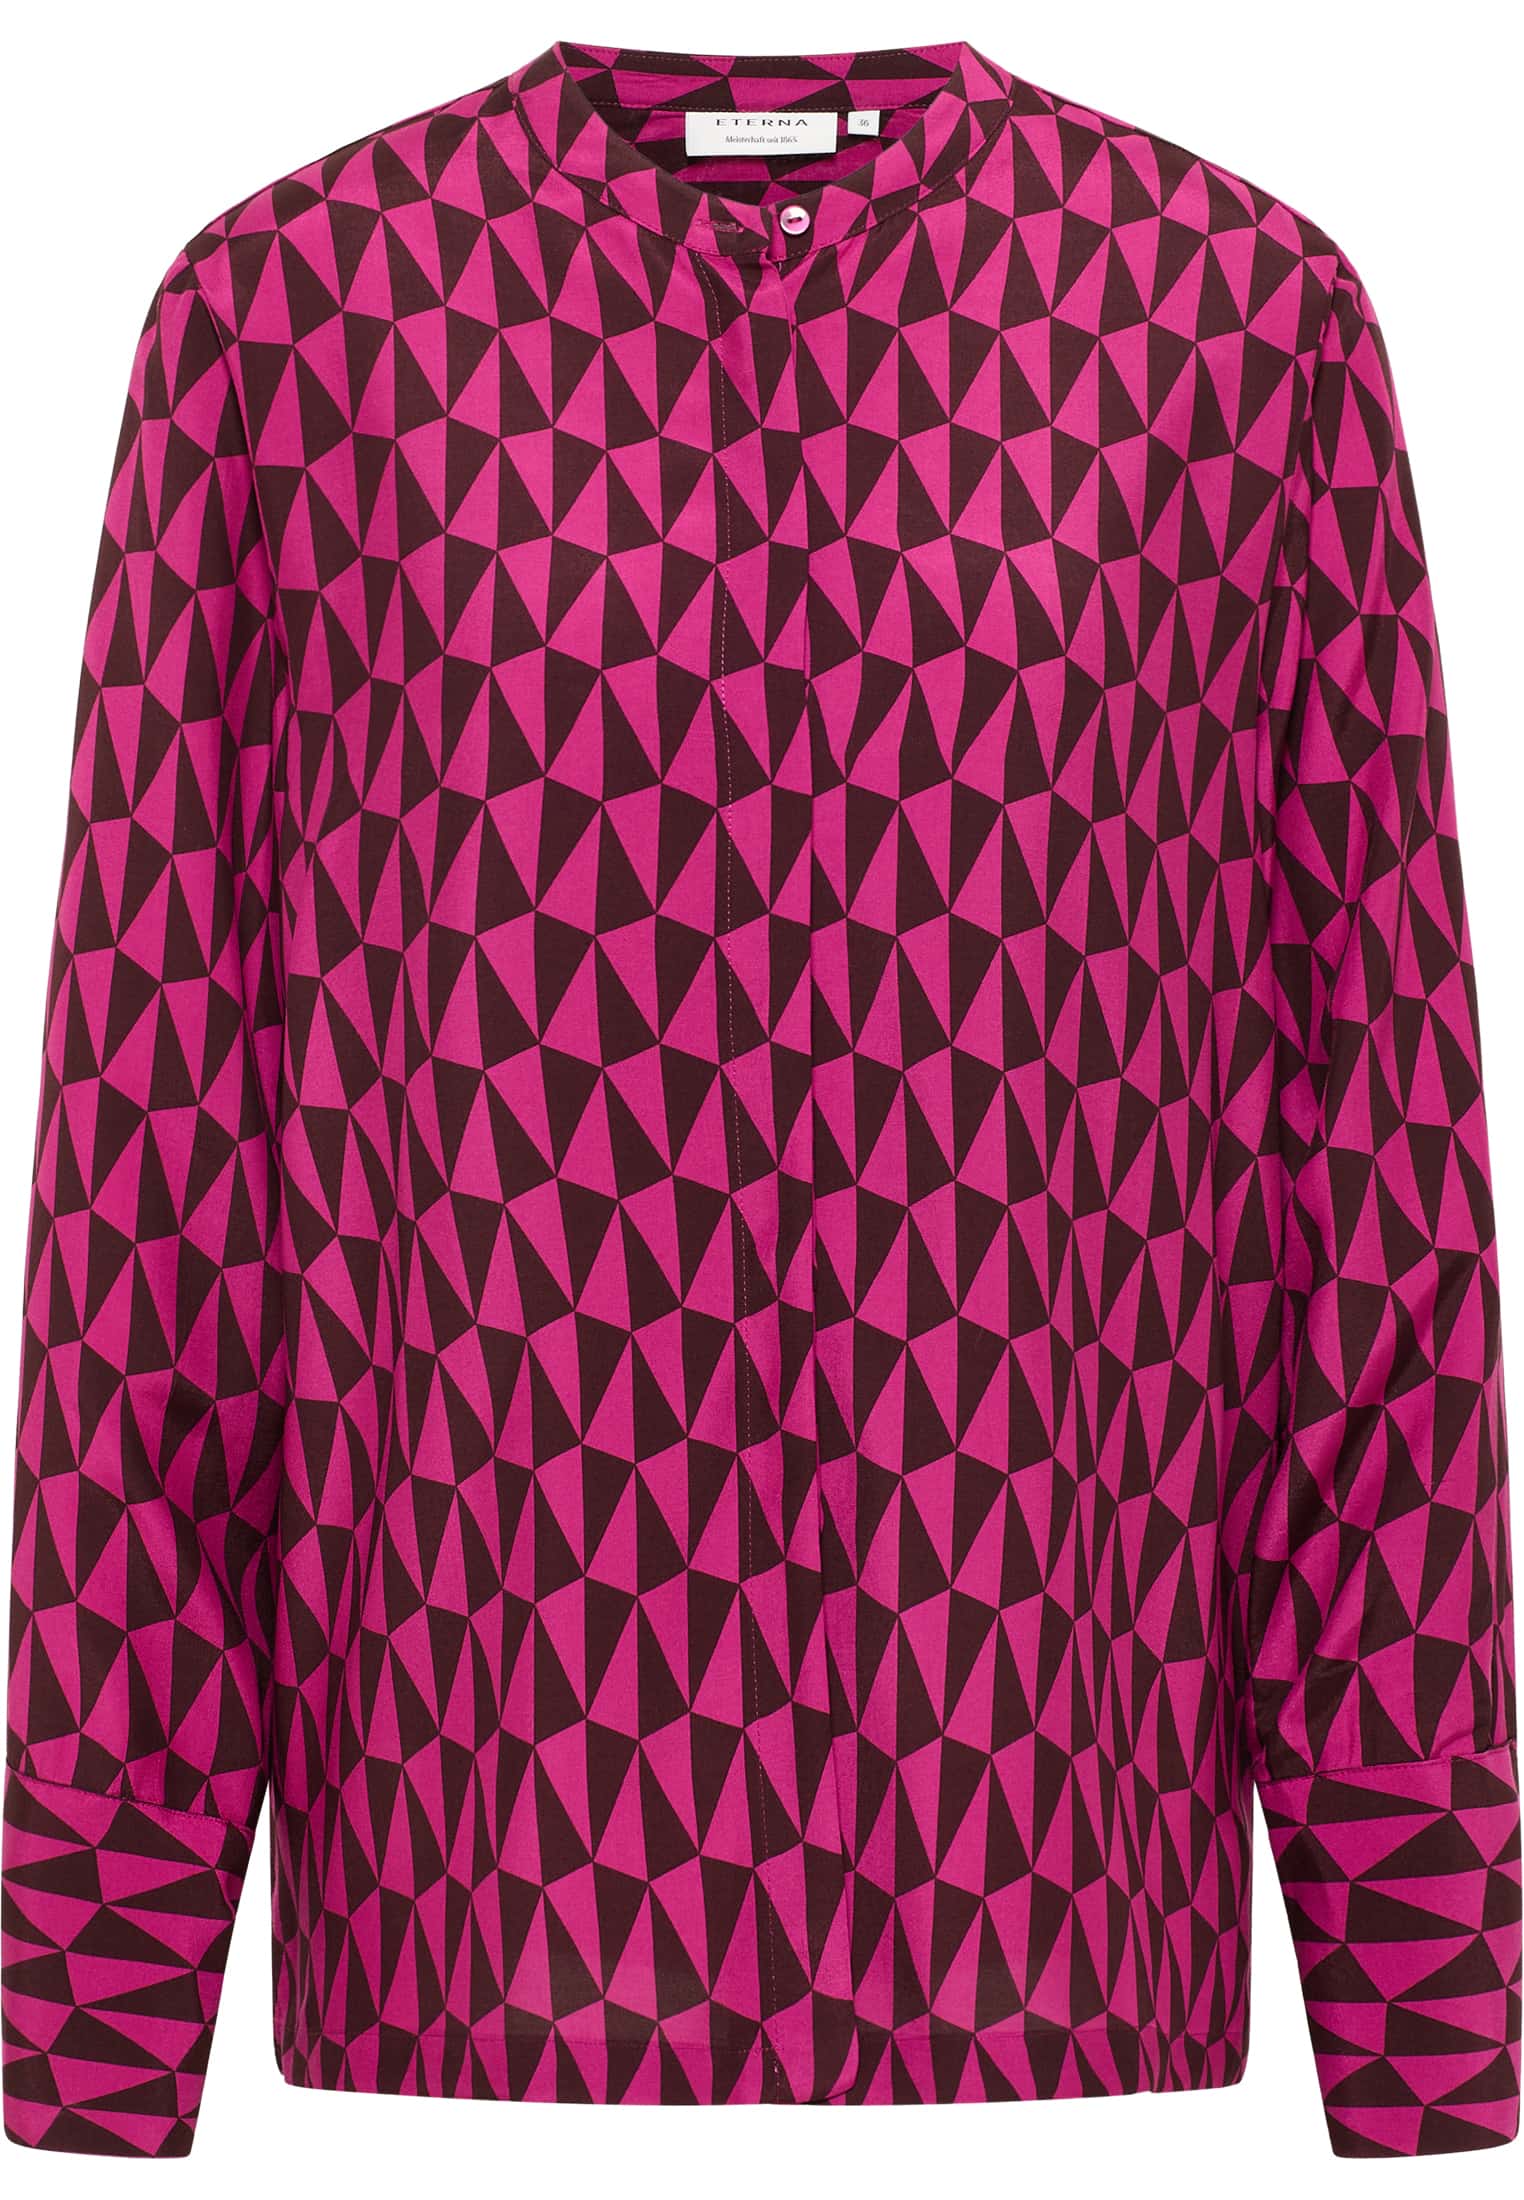 Blusenshirt in pink bedruckt | | 42 | Langarm | pink 2BL04250-15-21-42-1/1